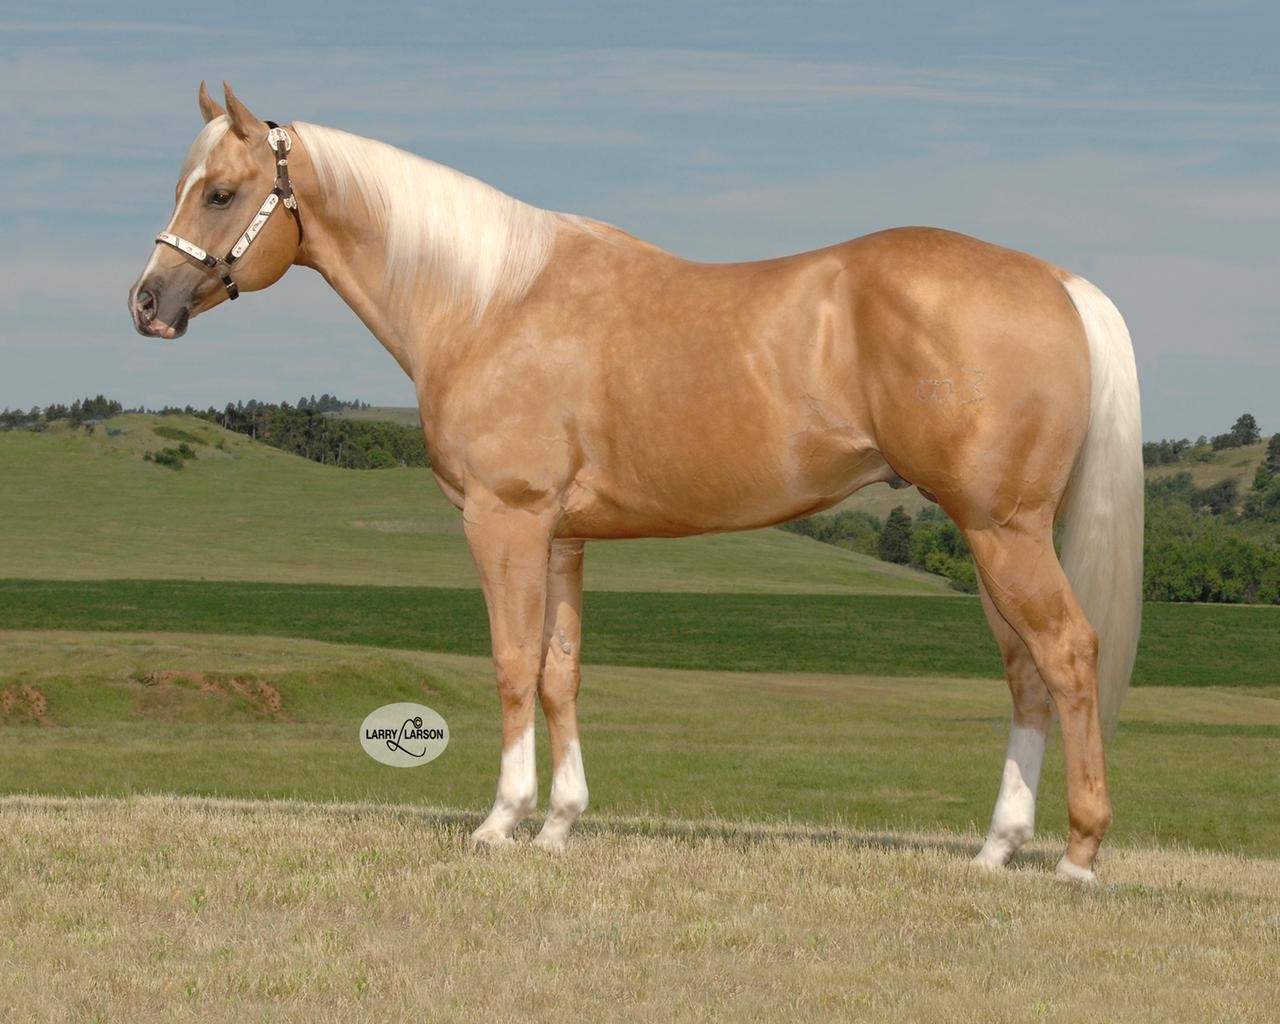 Imaspecial kindaguy brif stallion